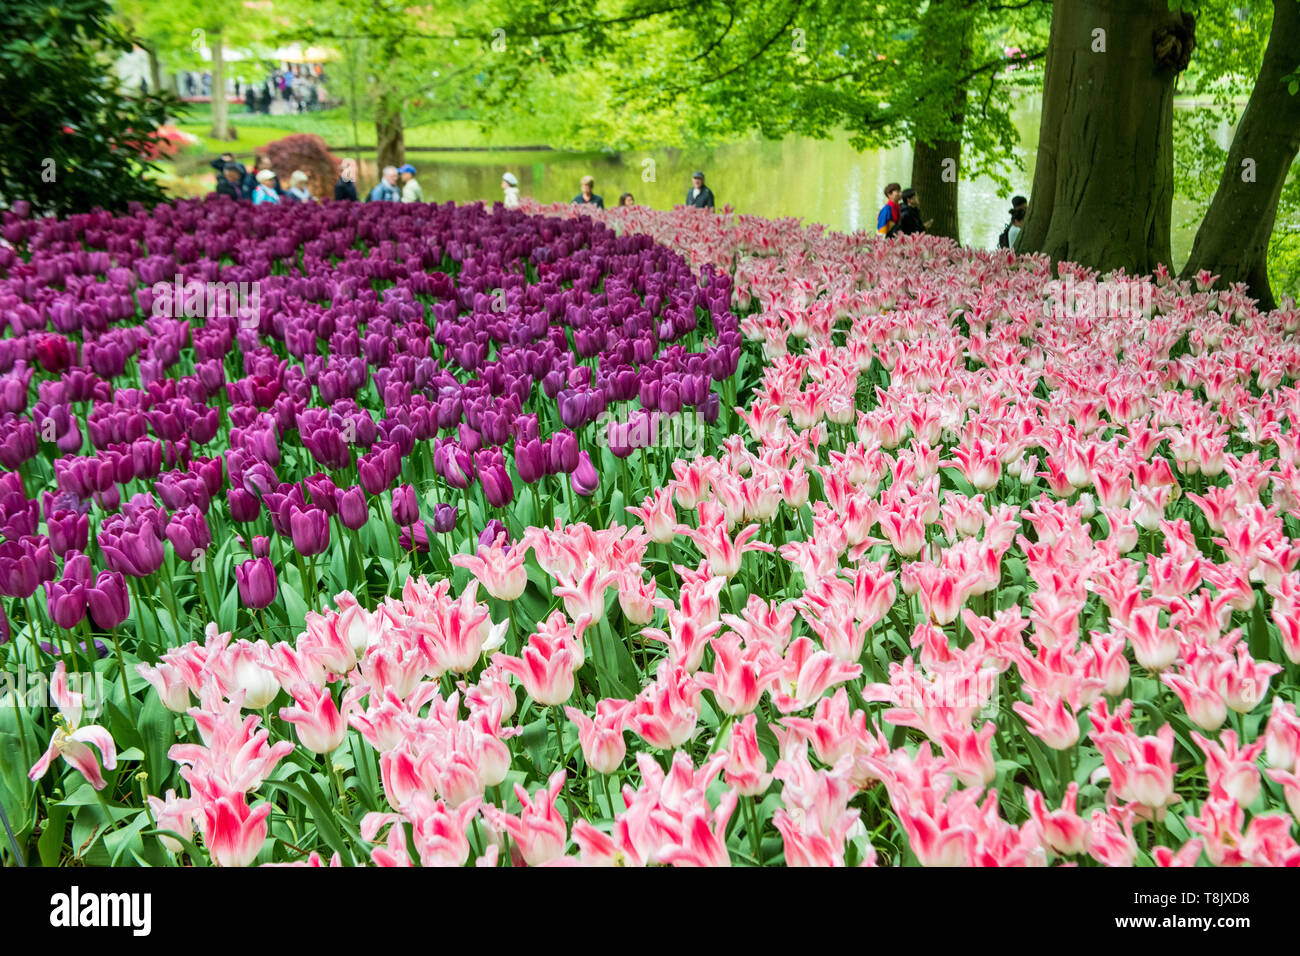 Keukenhof Gardens tourists - Netherlands - tourism tulips - pink and purple tulips - tulip flower beds - tulip flowers - pink tulips - purple tulips Stock Photo